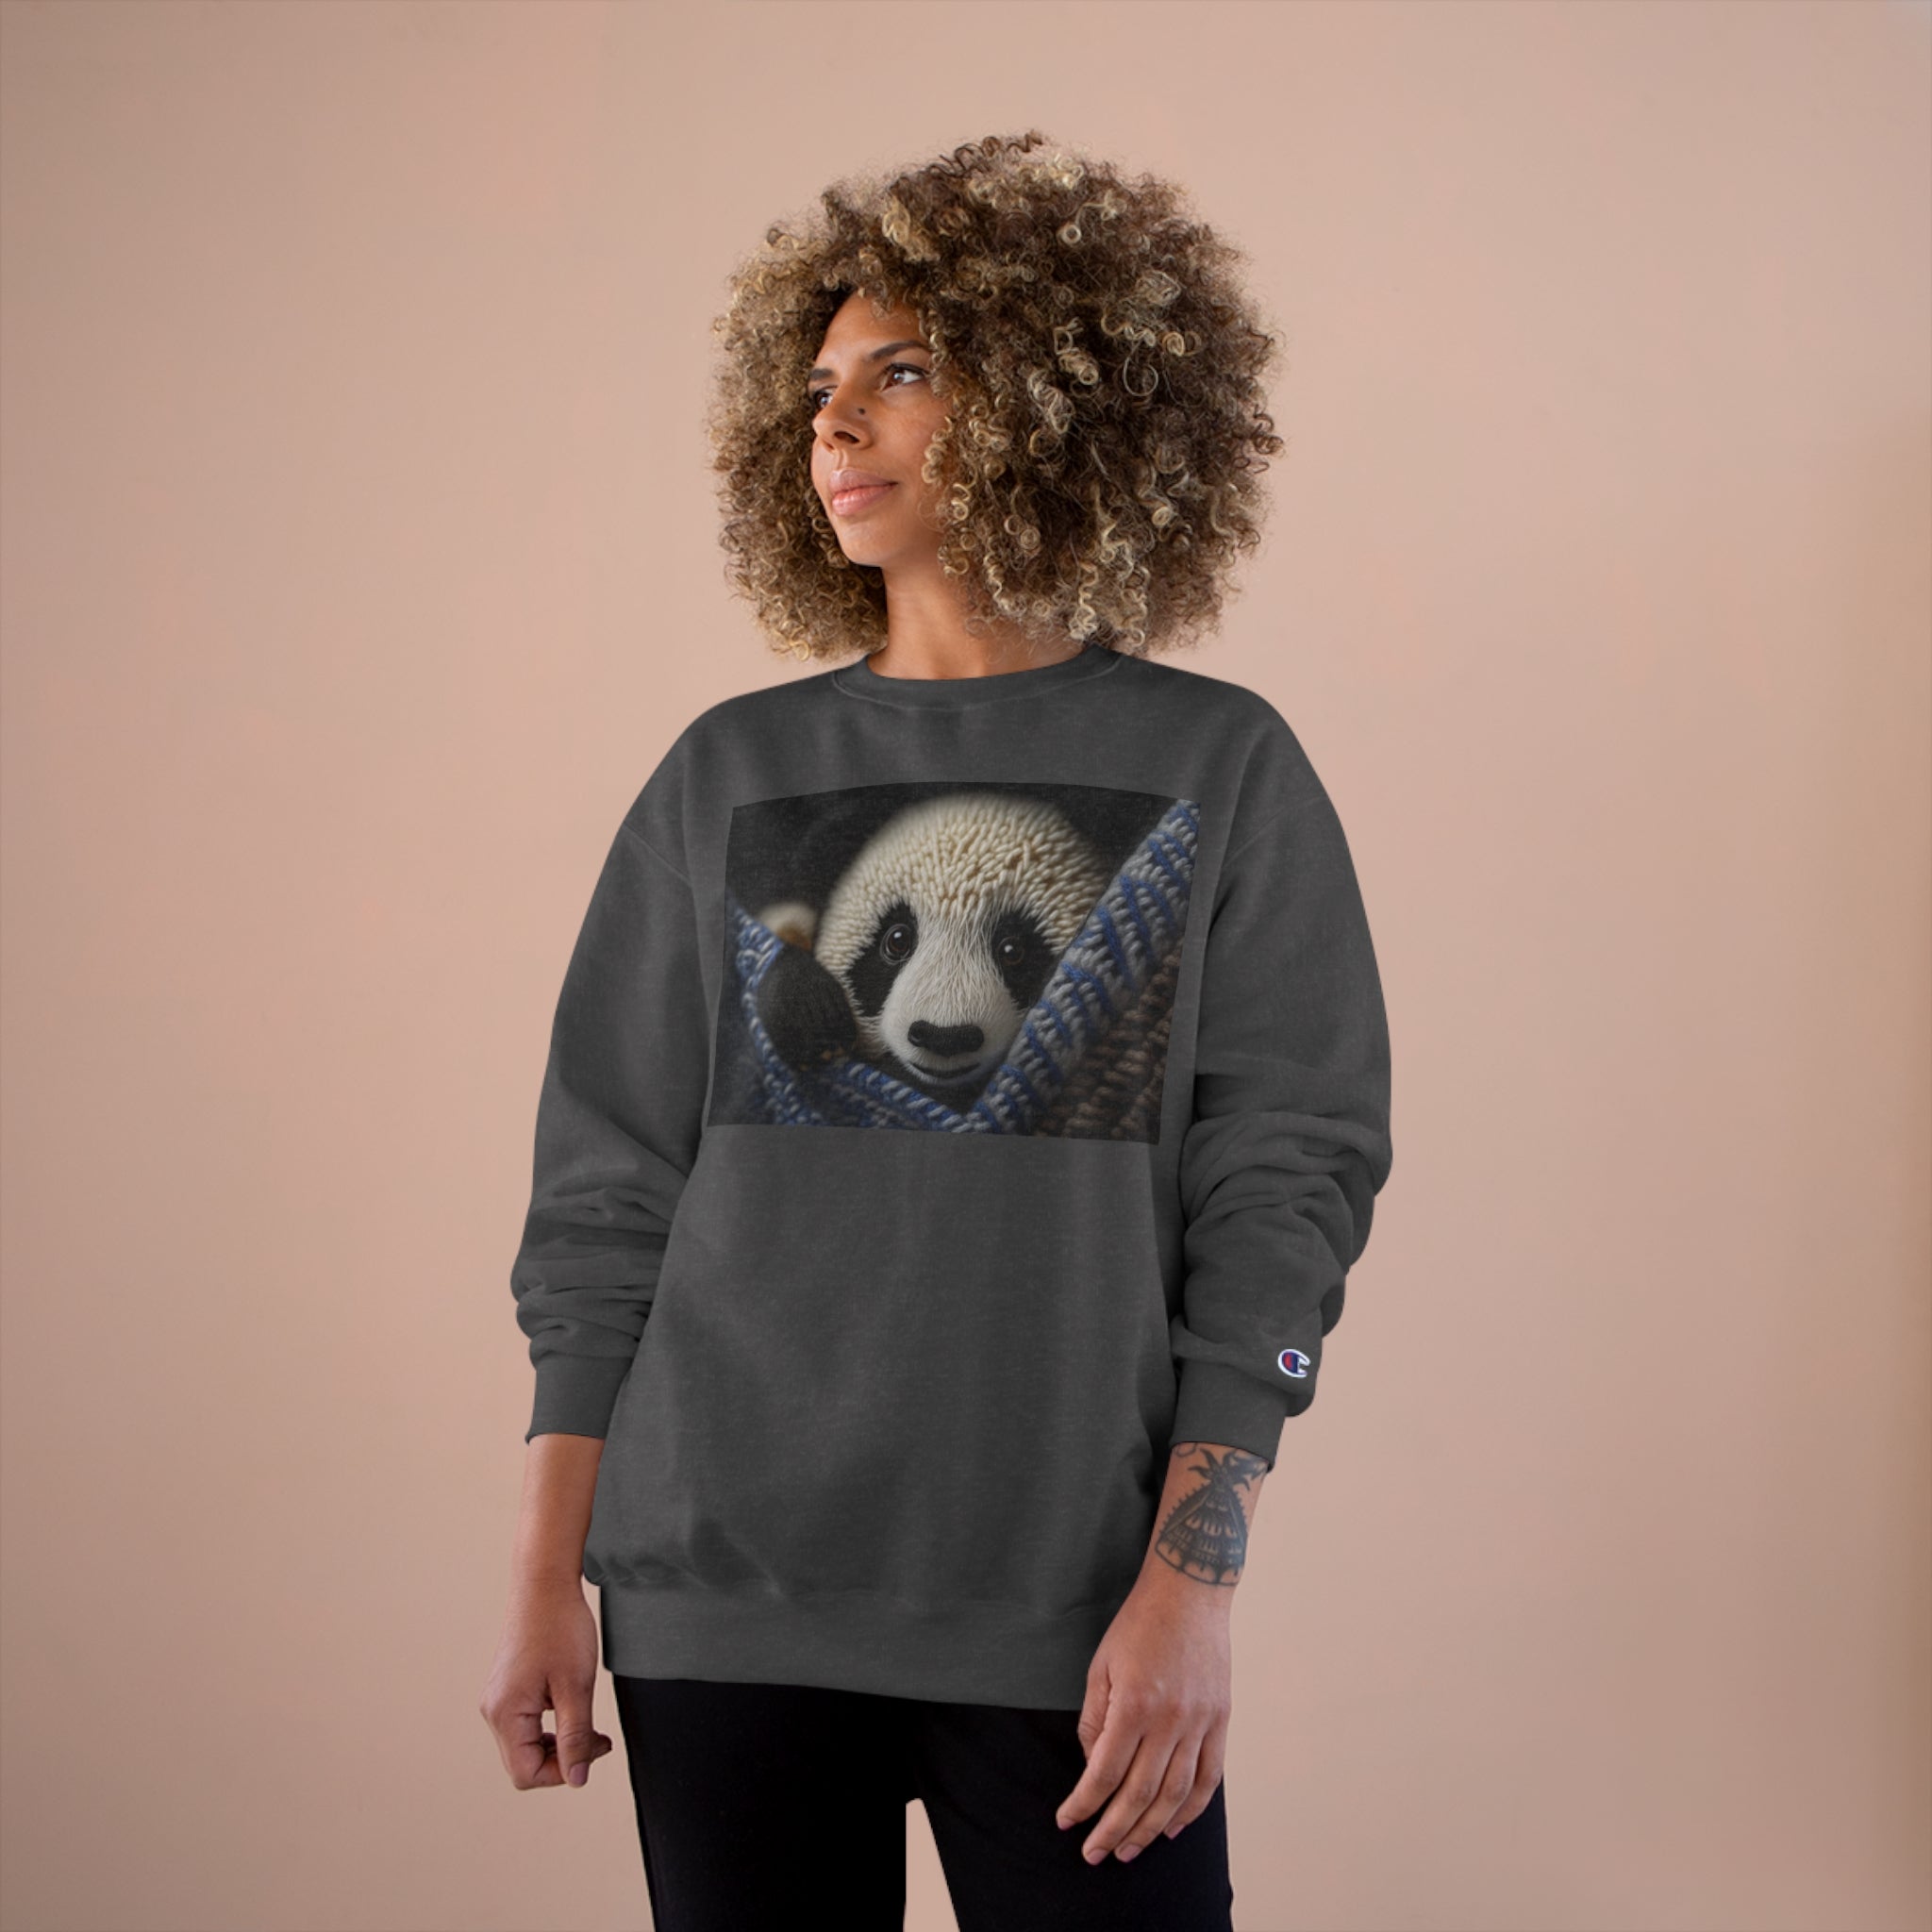 Champion Sweatshirt - Knit Animals, Giant Panda Cub